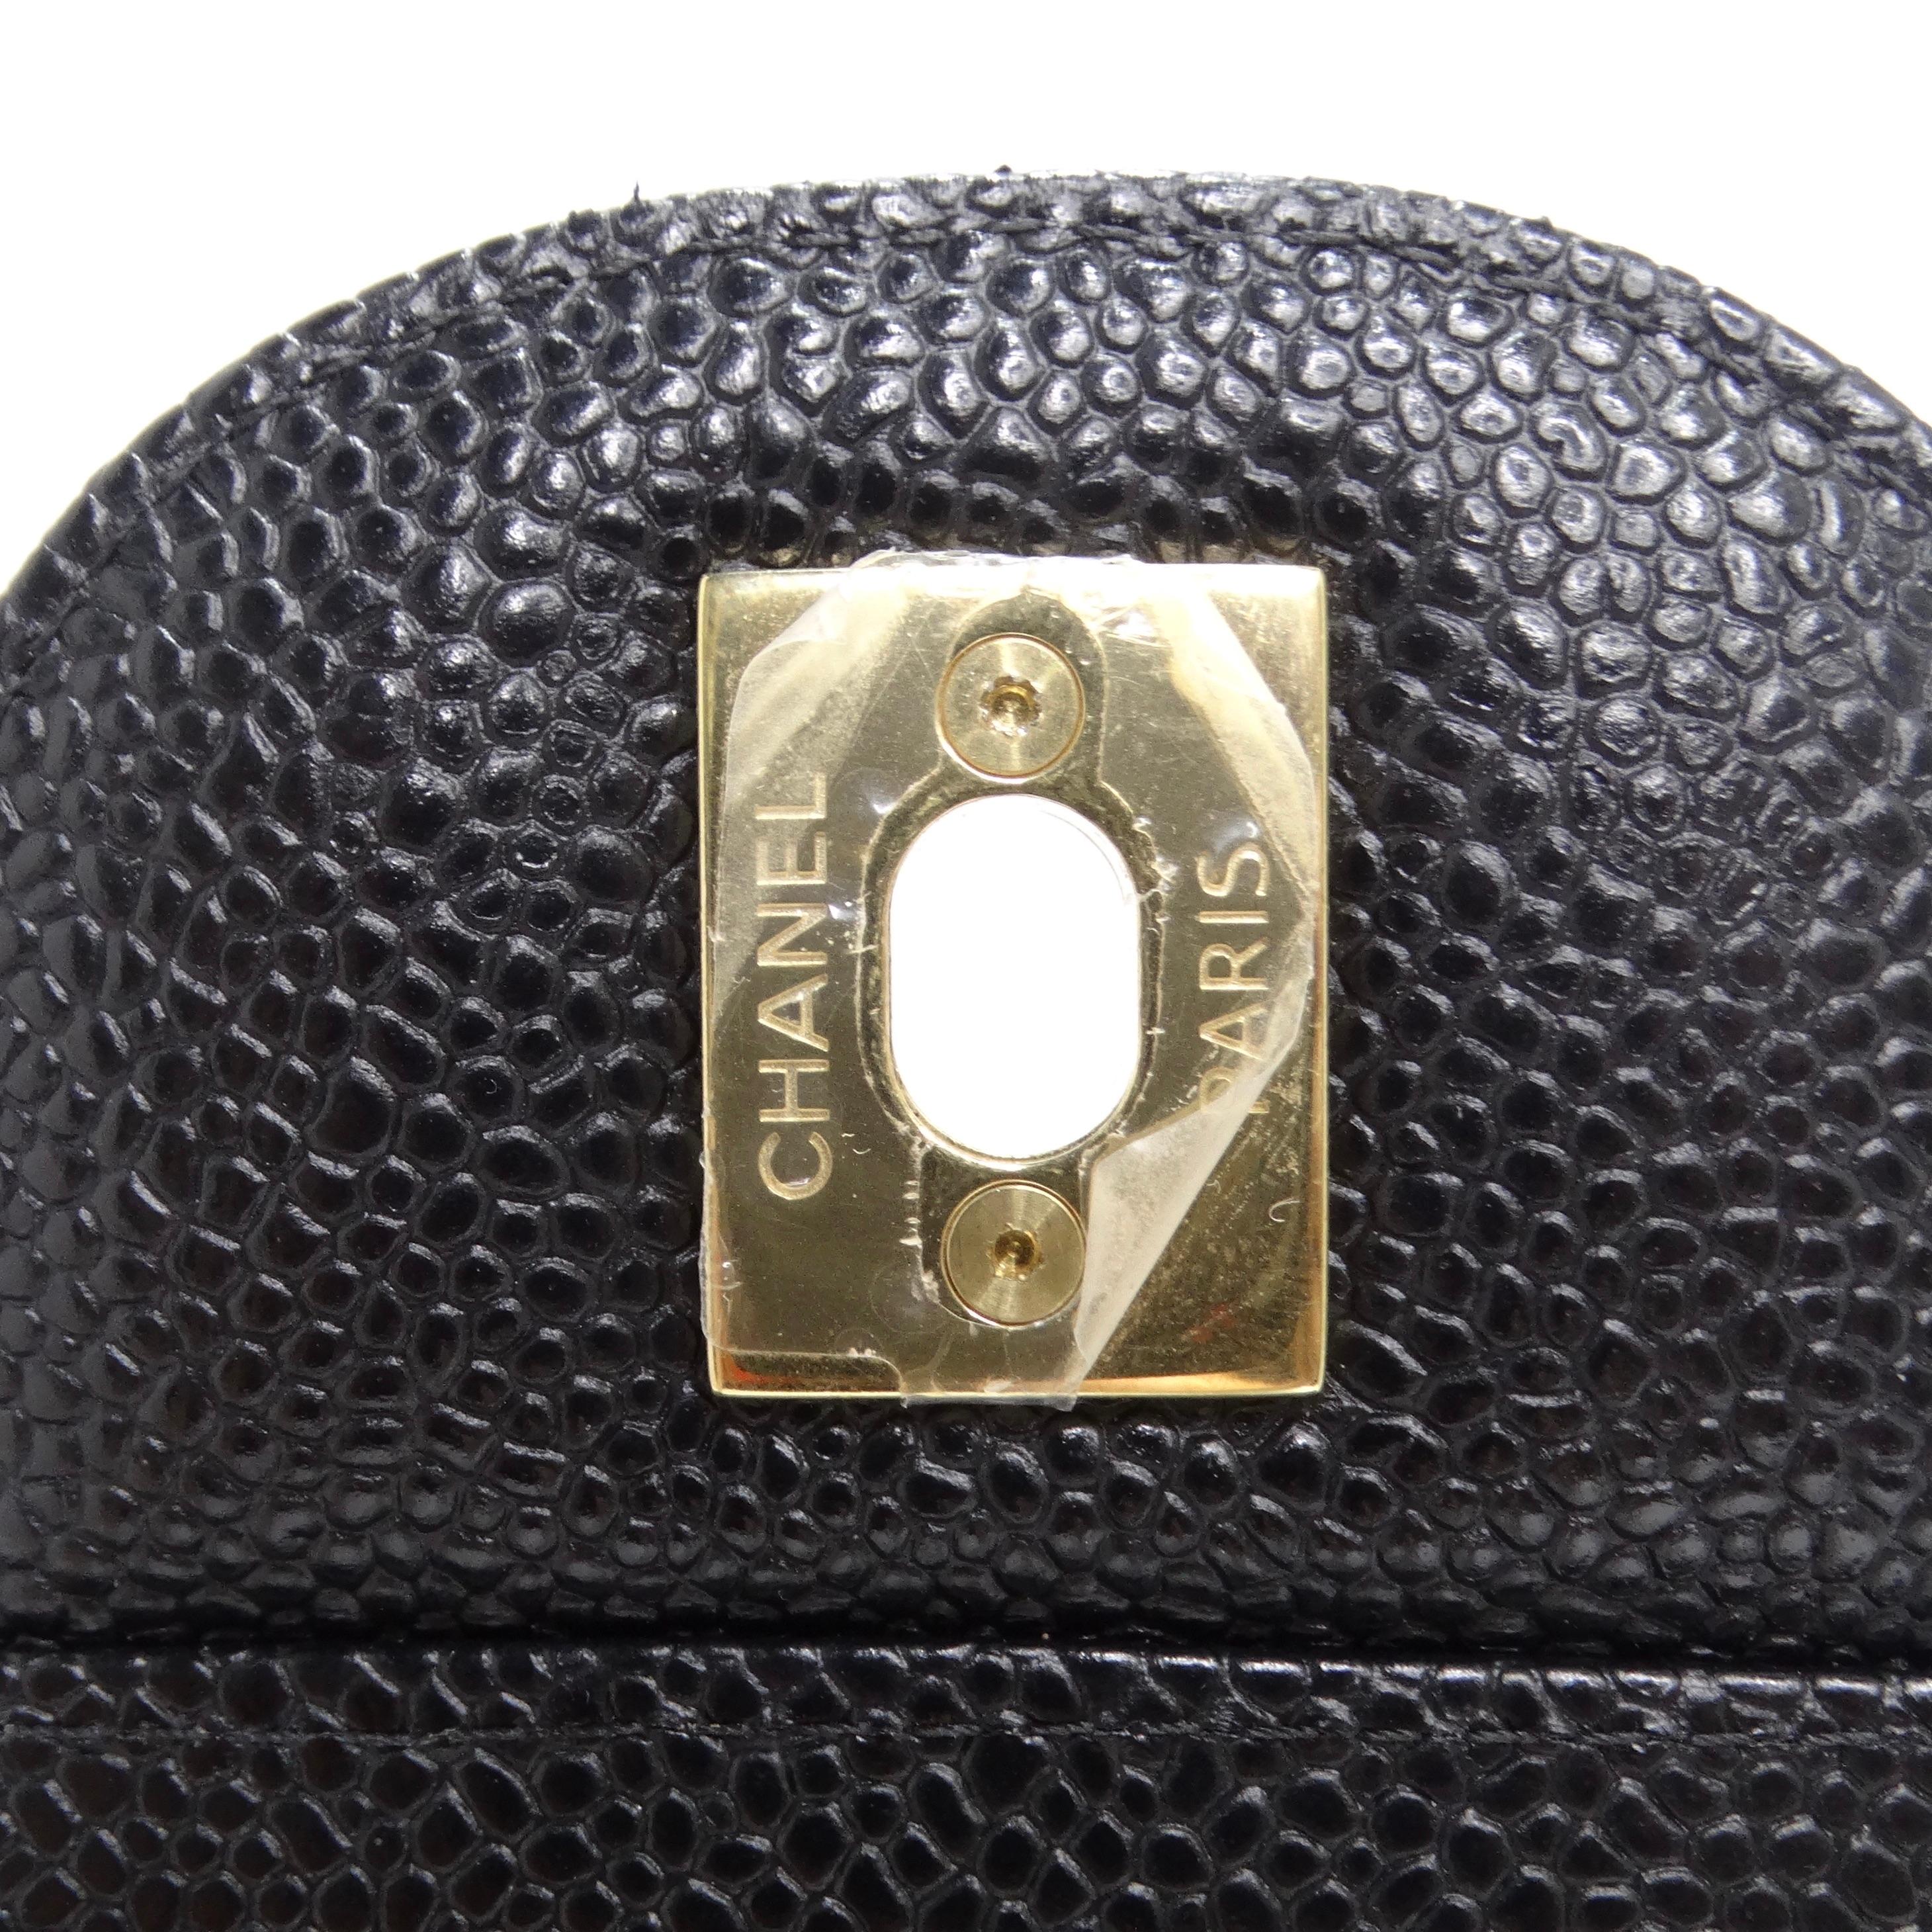 Chanel Large Classic Quilted Caviar Handbag Black/Burgundy 8